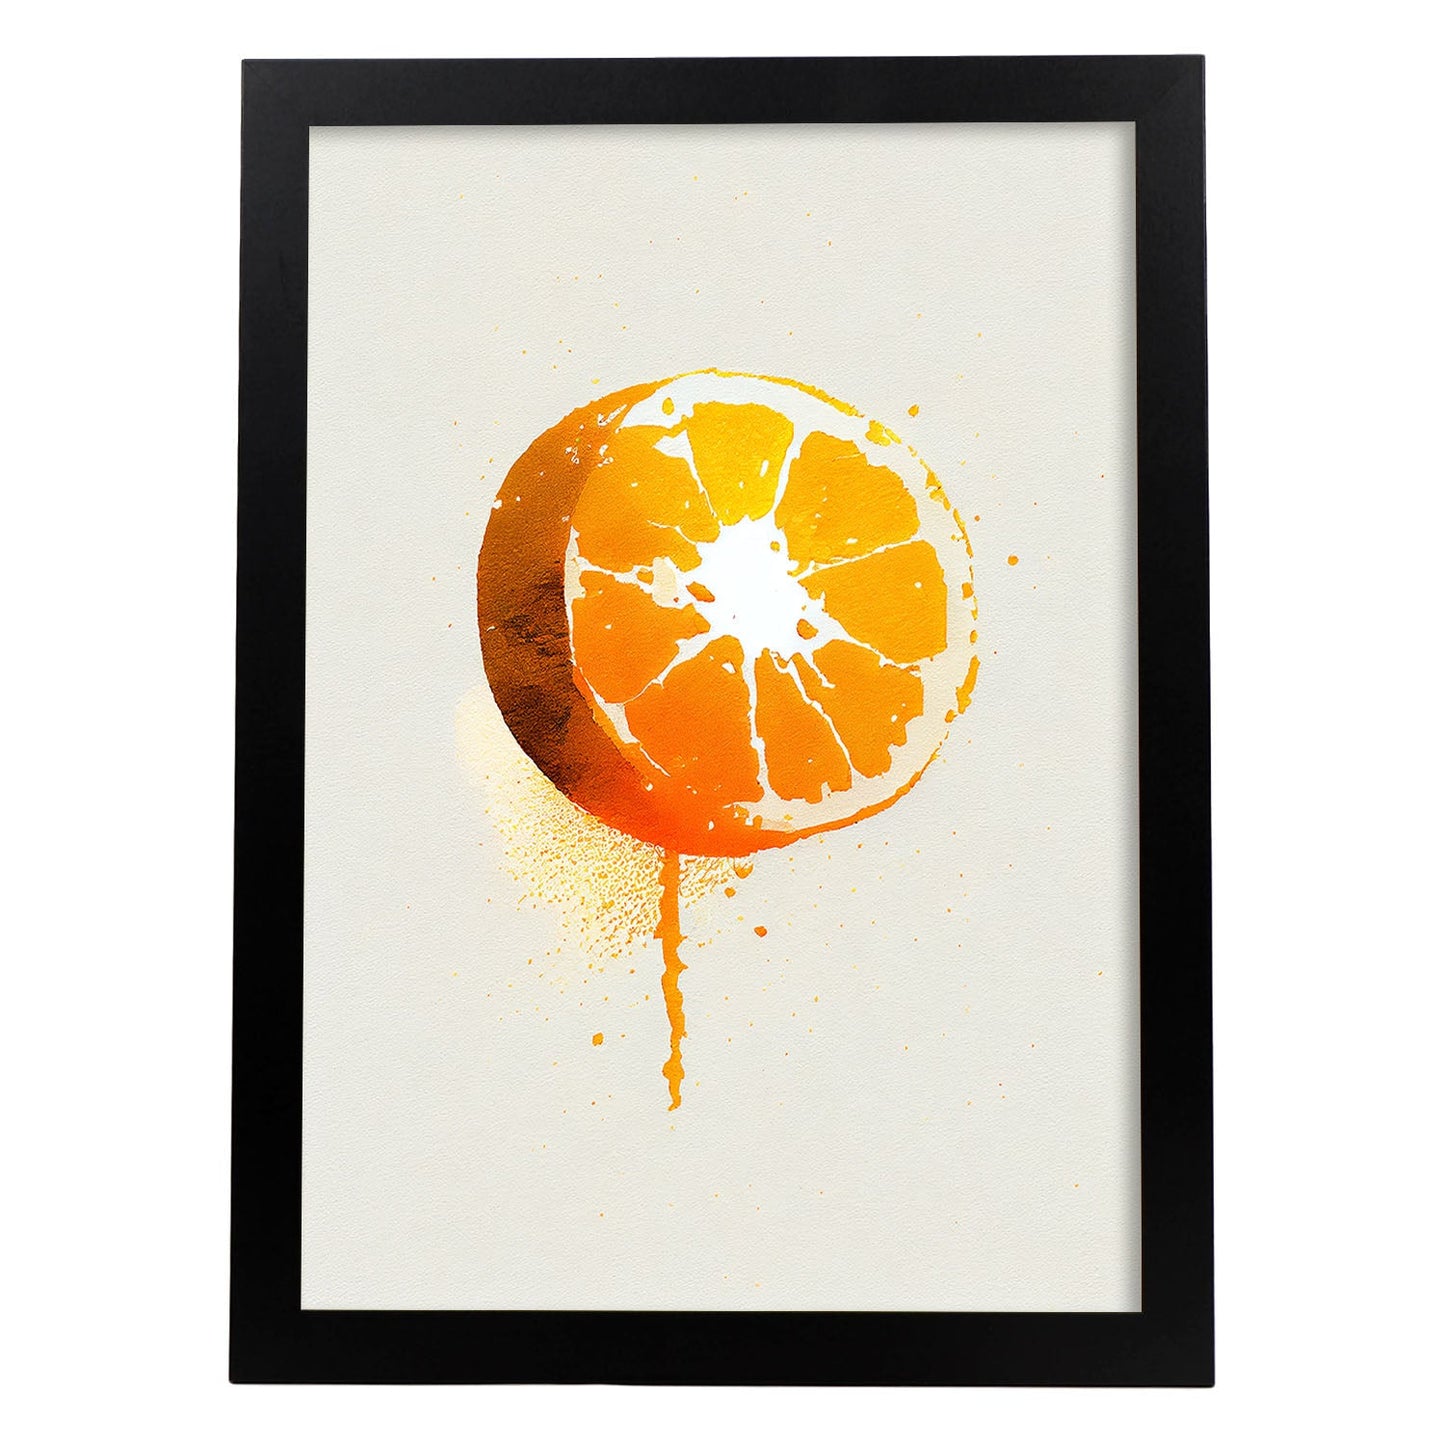 Nacnic minimalist Orange_2. Aesthetic Wall Art Prints for Bedroom or Living Room Design.